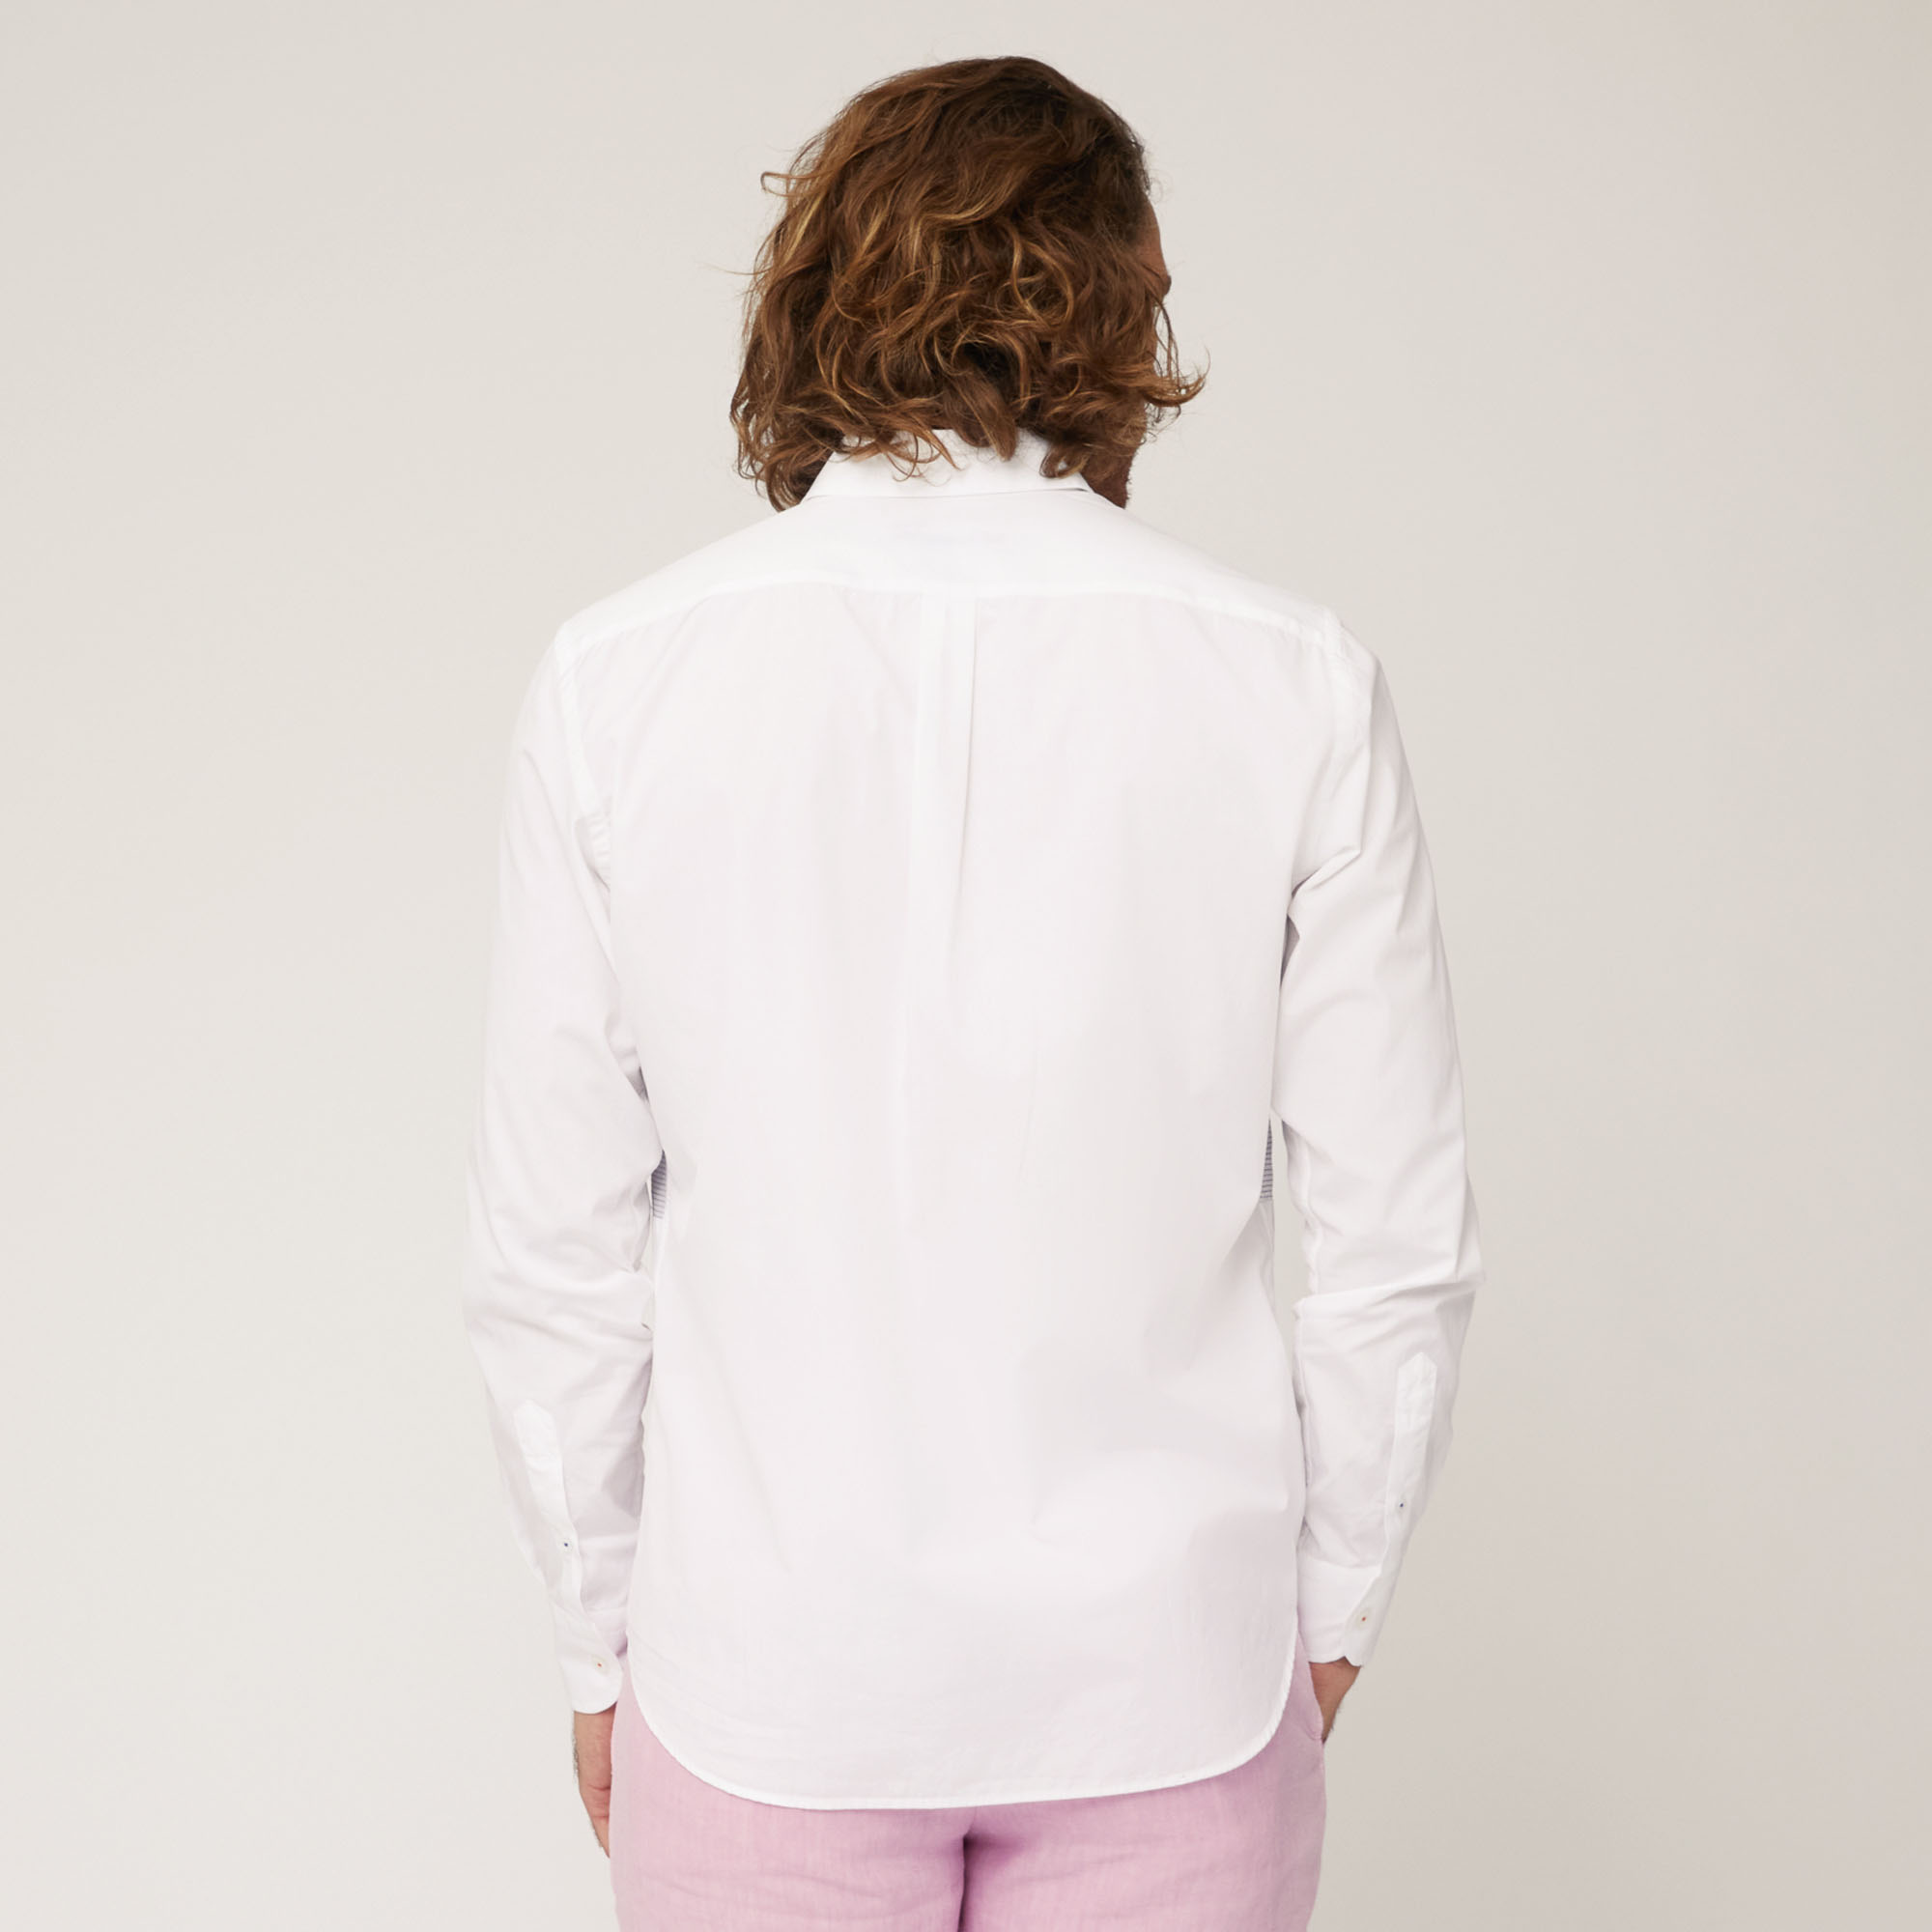 Camicia In Cotone Con Fasce Rigate, Bianco, large image number 1